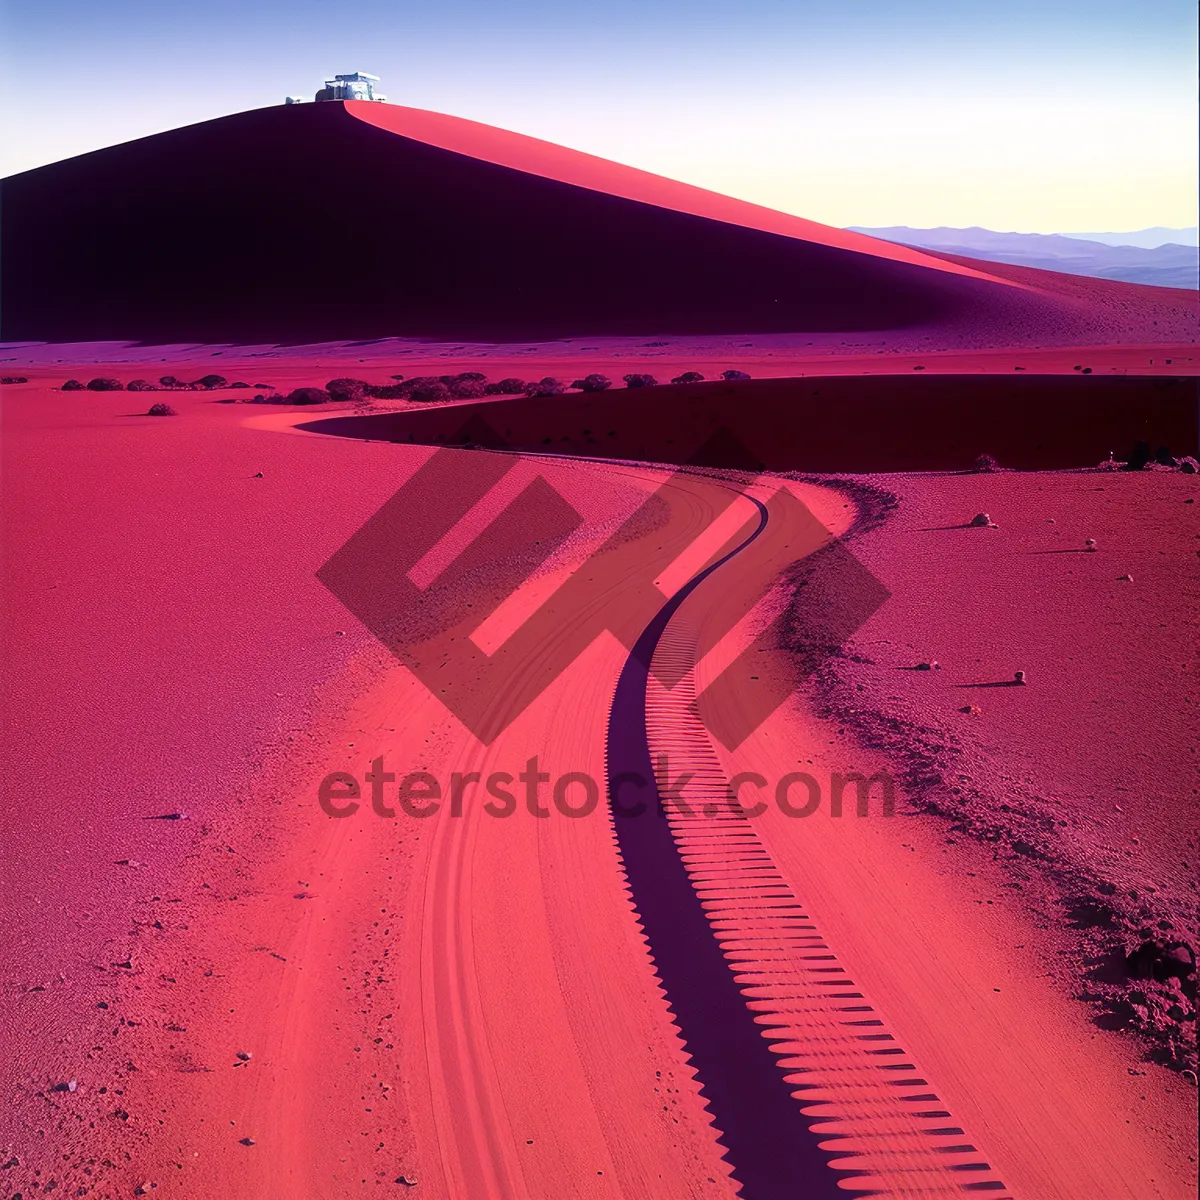 Picture of Sunset Dune Adventure: A Scenic Desert Landscape